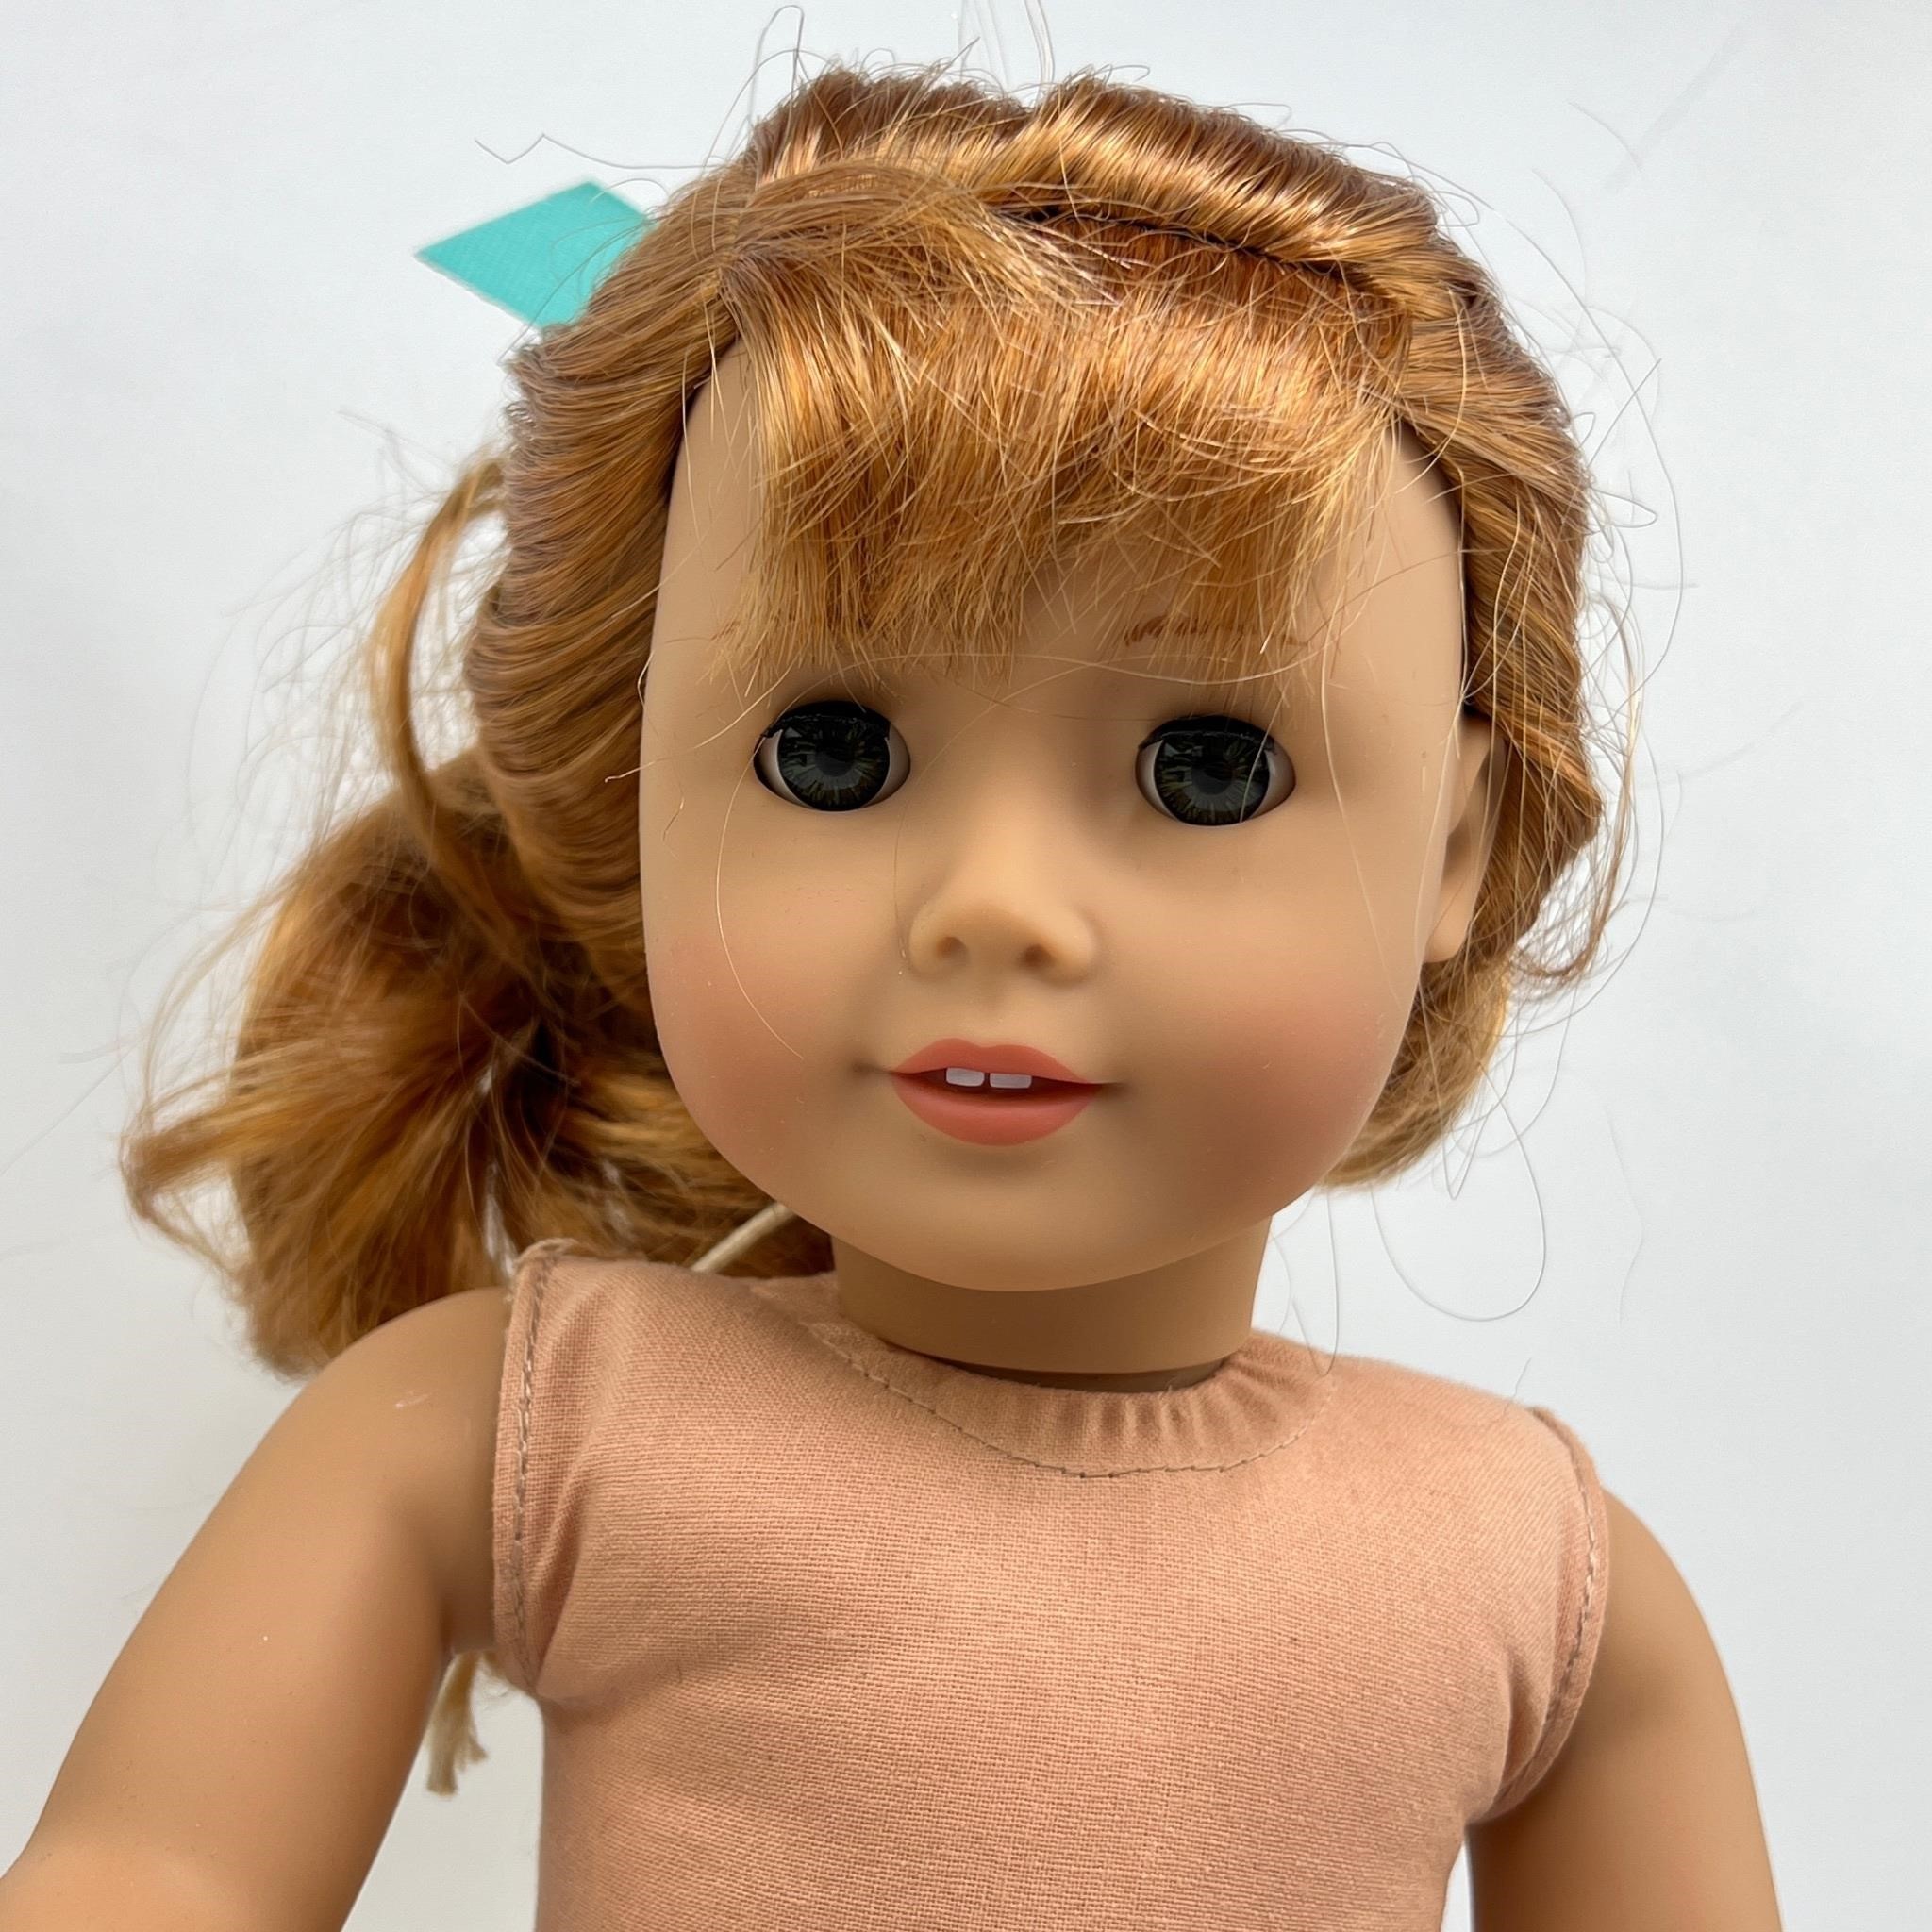 American Girl Doll 2014